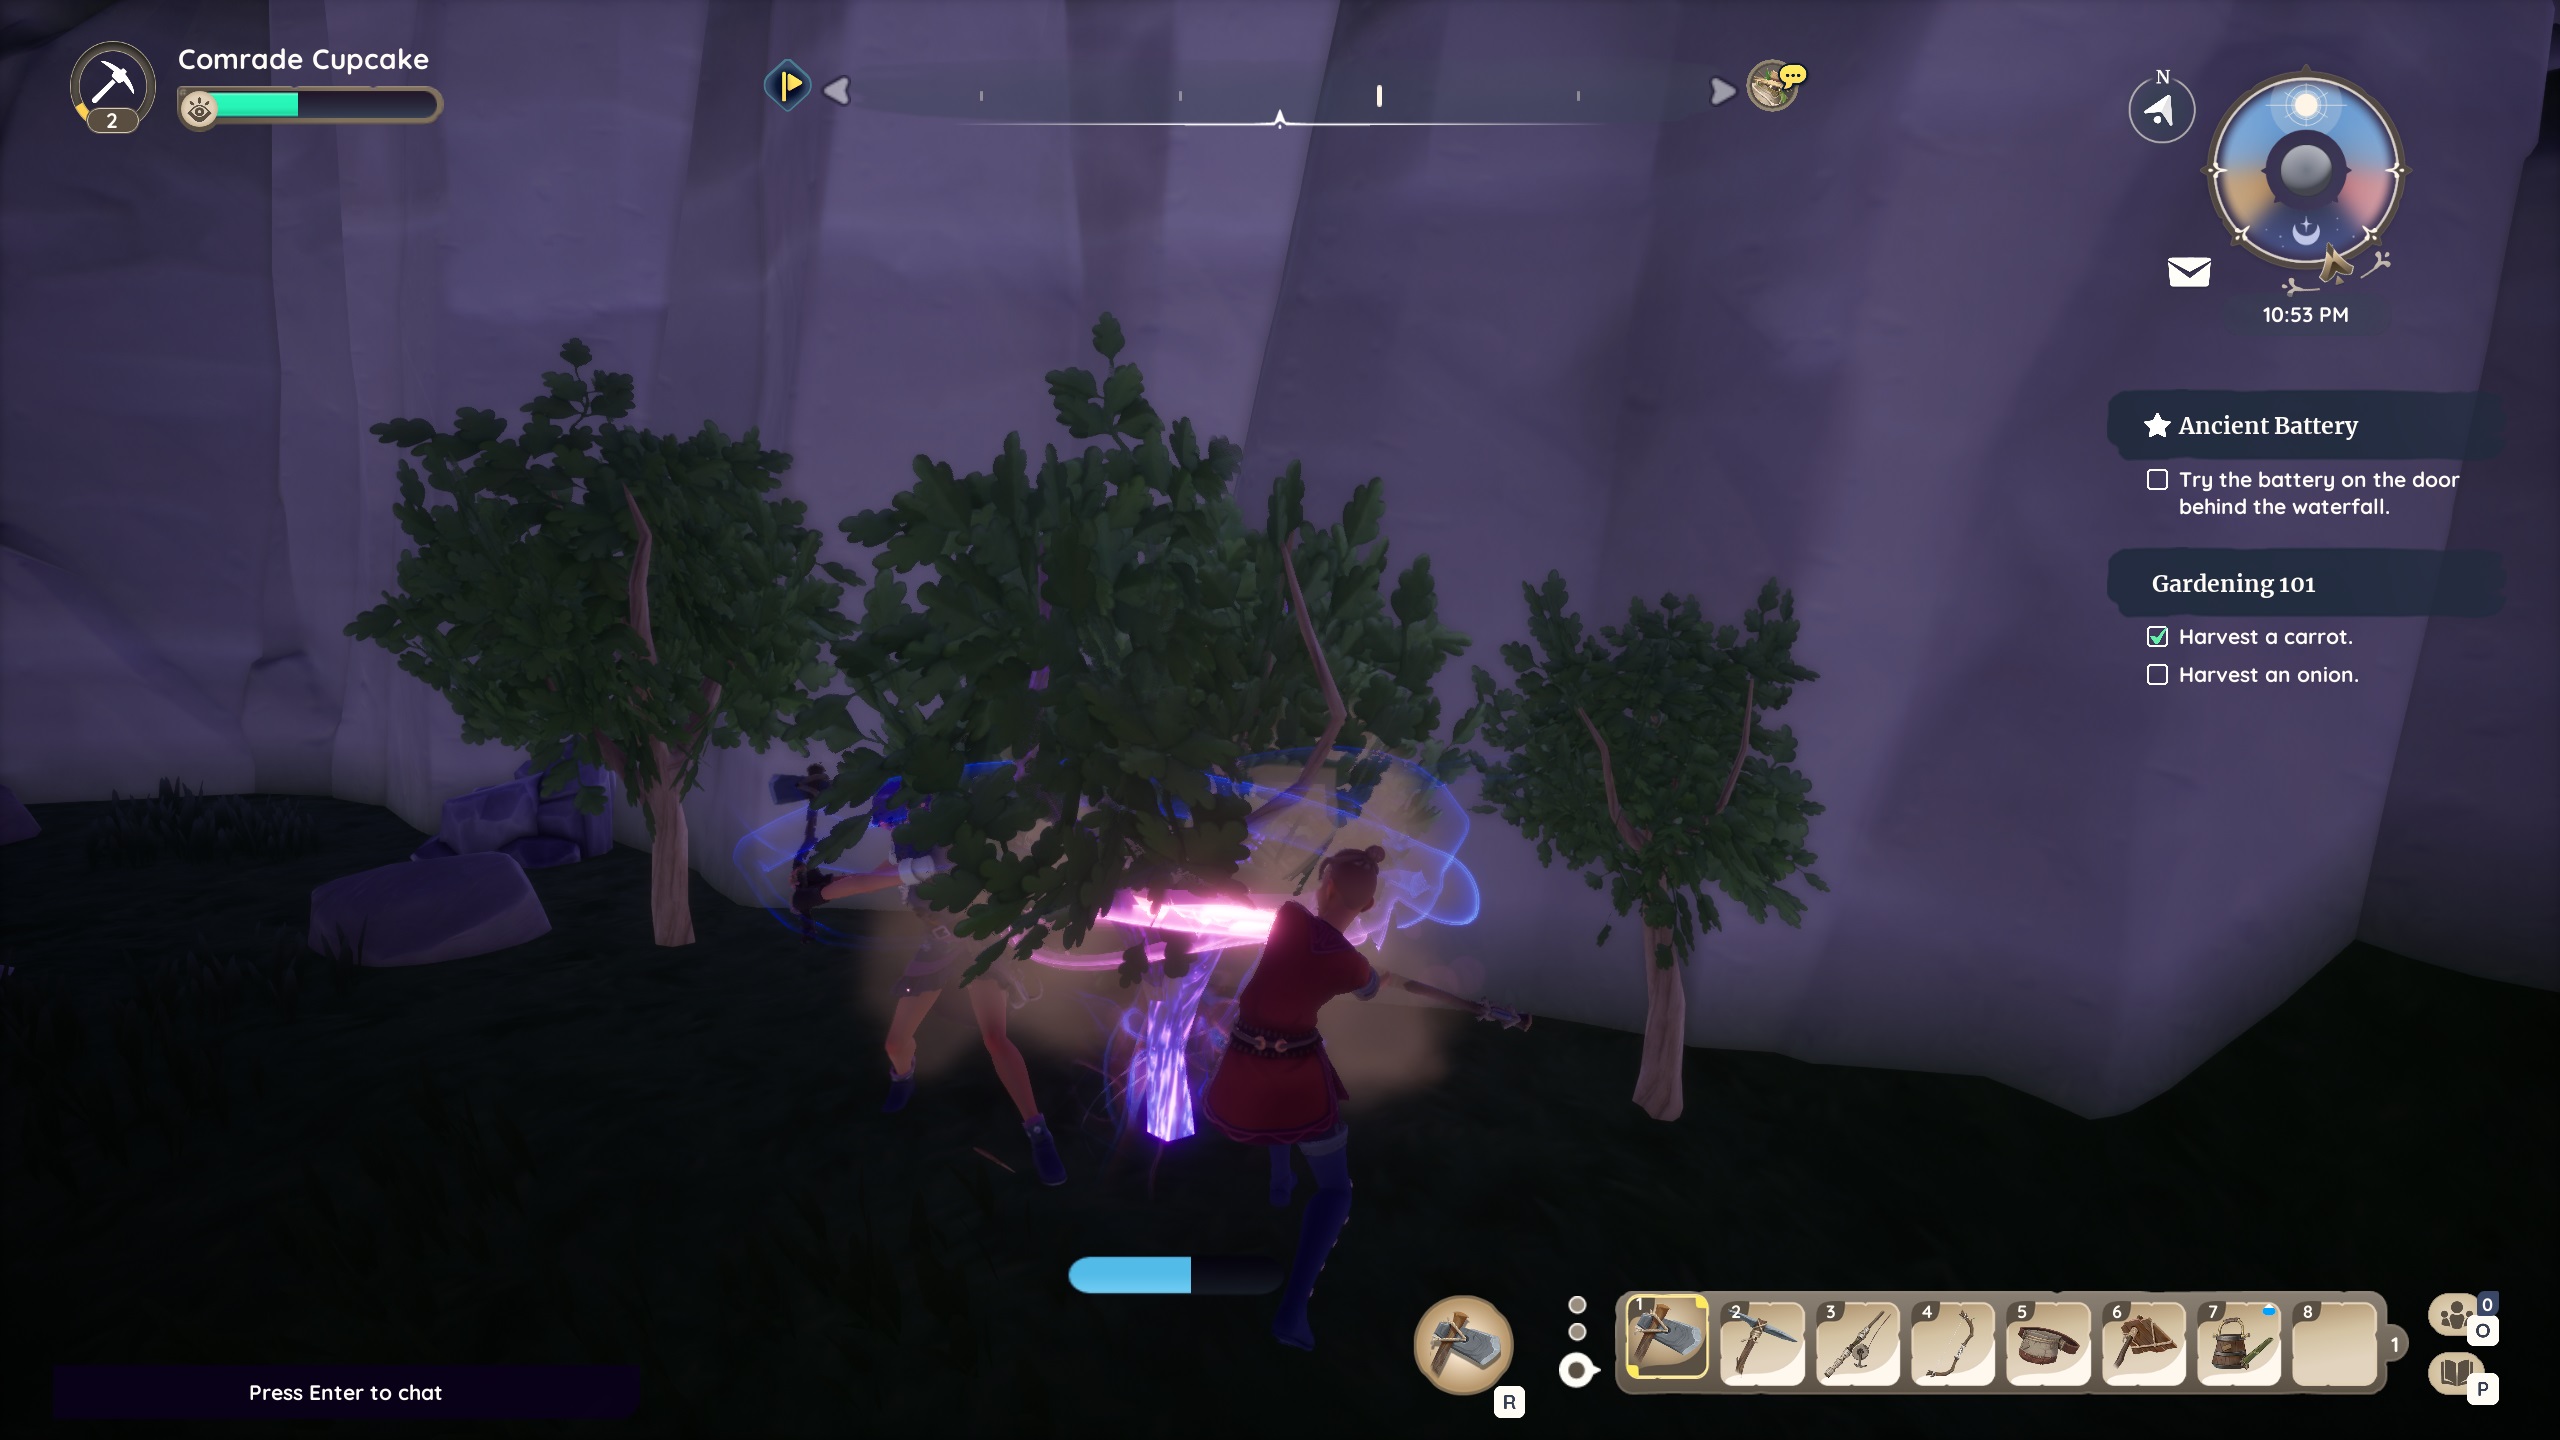 Palia - two players chop a glowing purple tree together